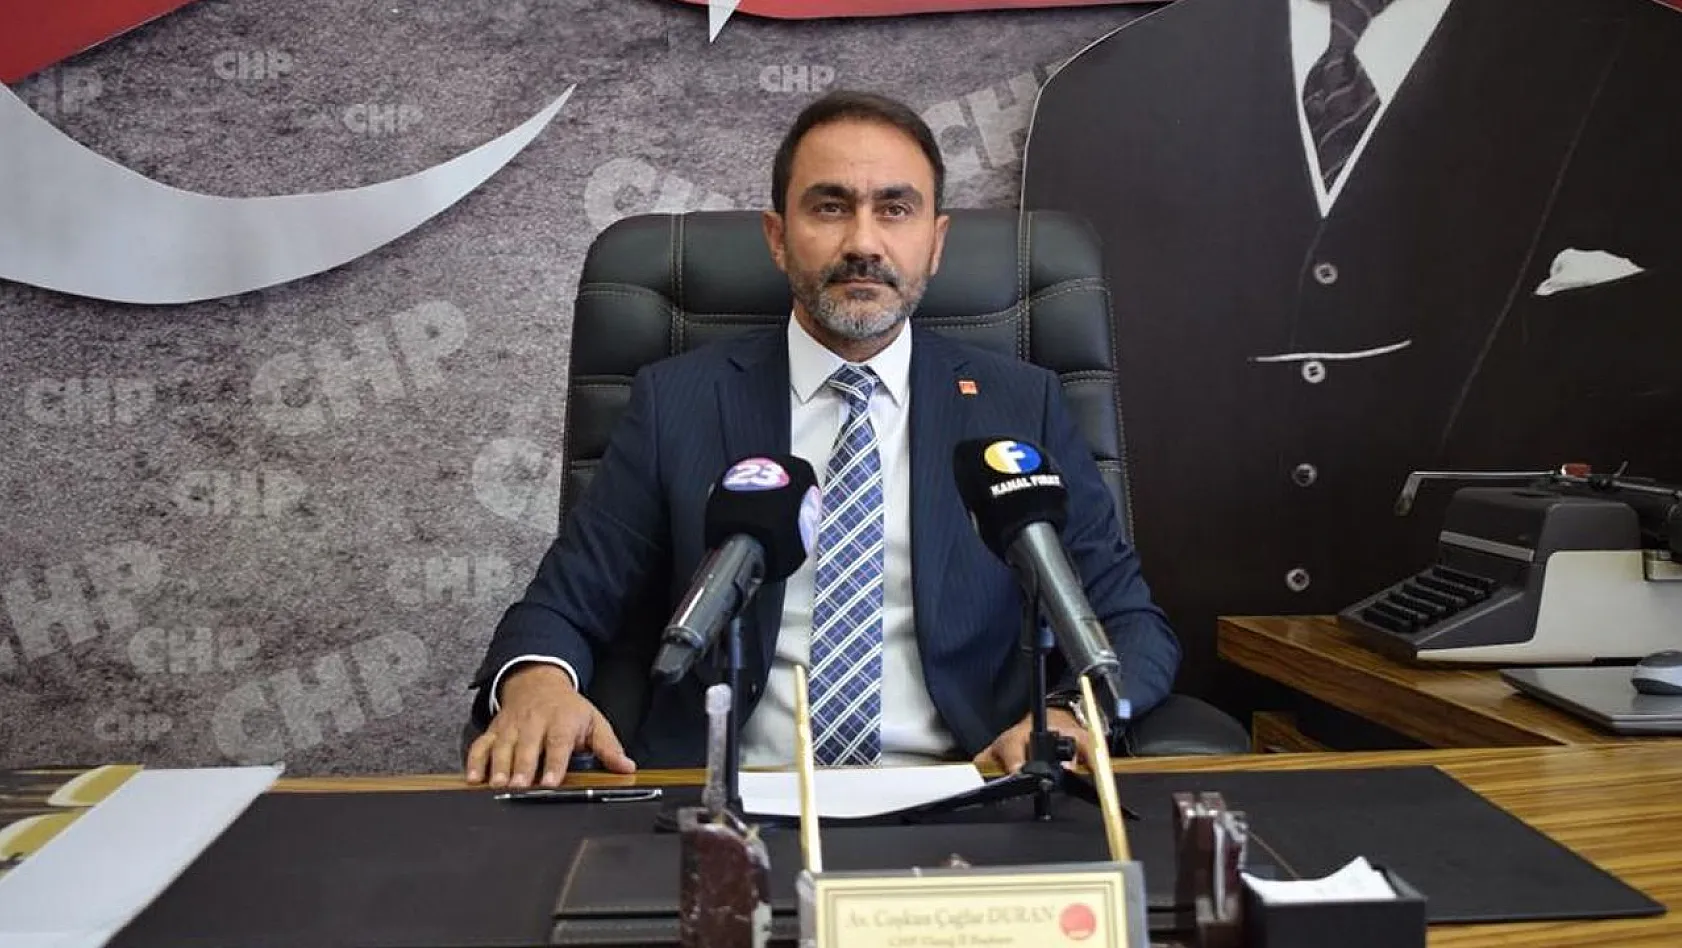 CHP İl Başkanı Duran: '4 İlçemiz Yok Sayılmaktadır'